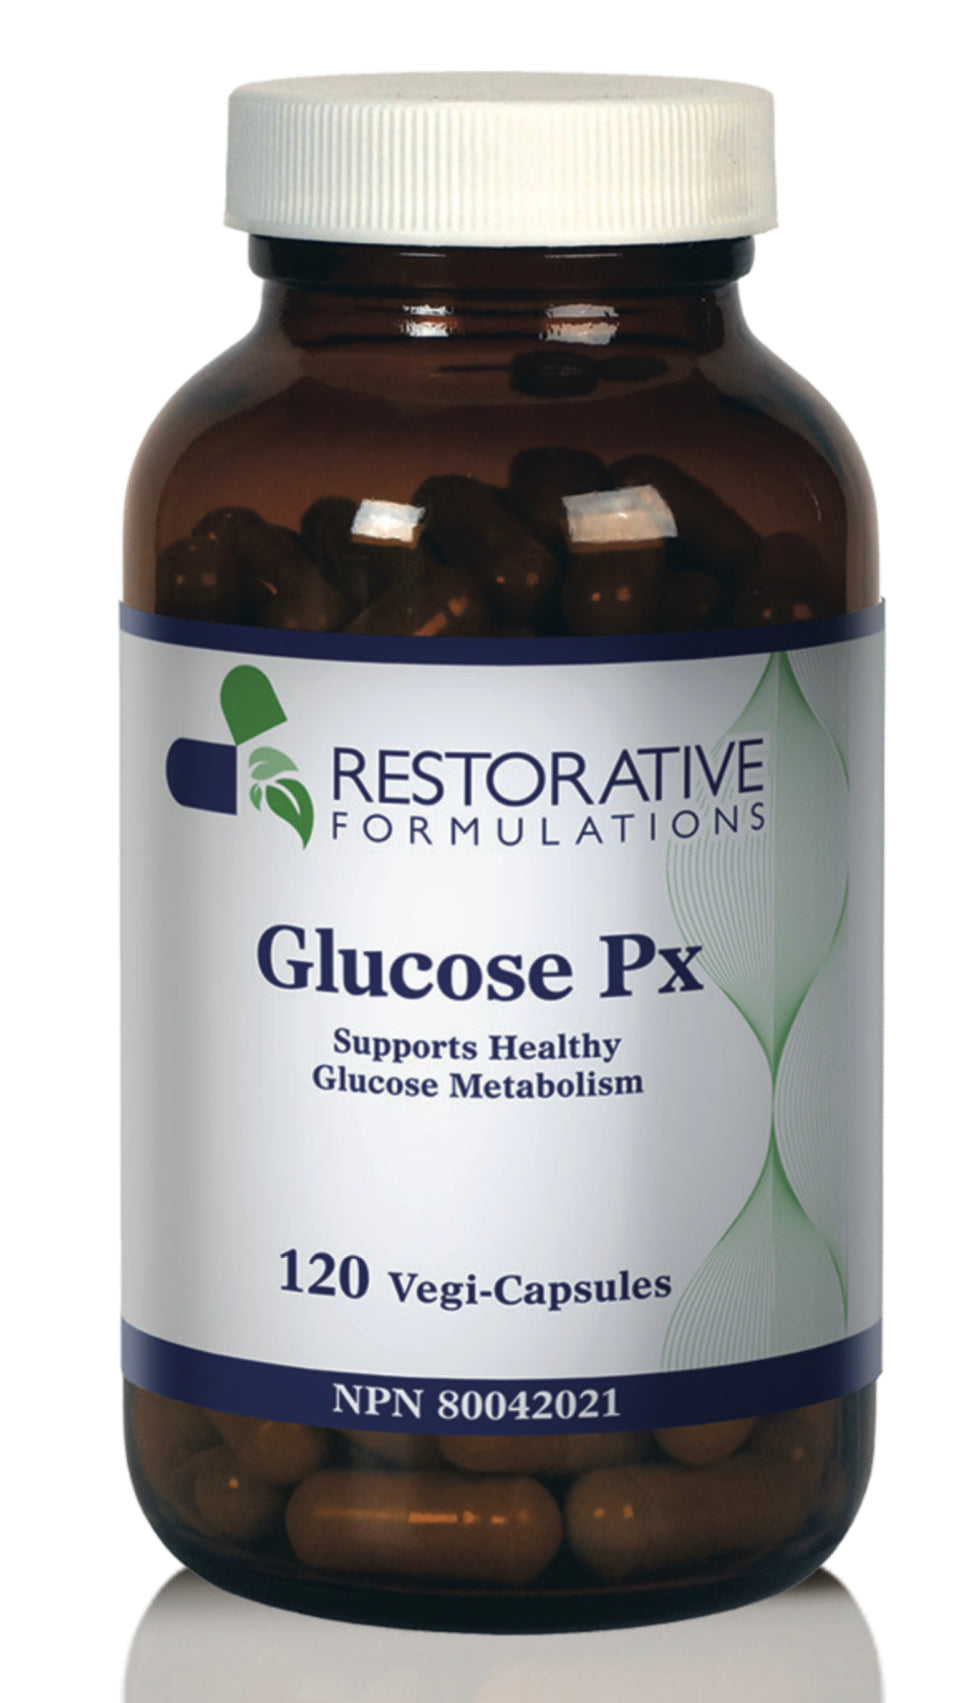 Restorative formulations Glucose Px (120 vcaps)